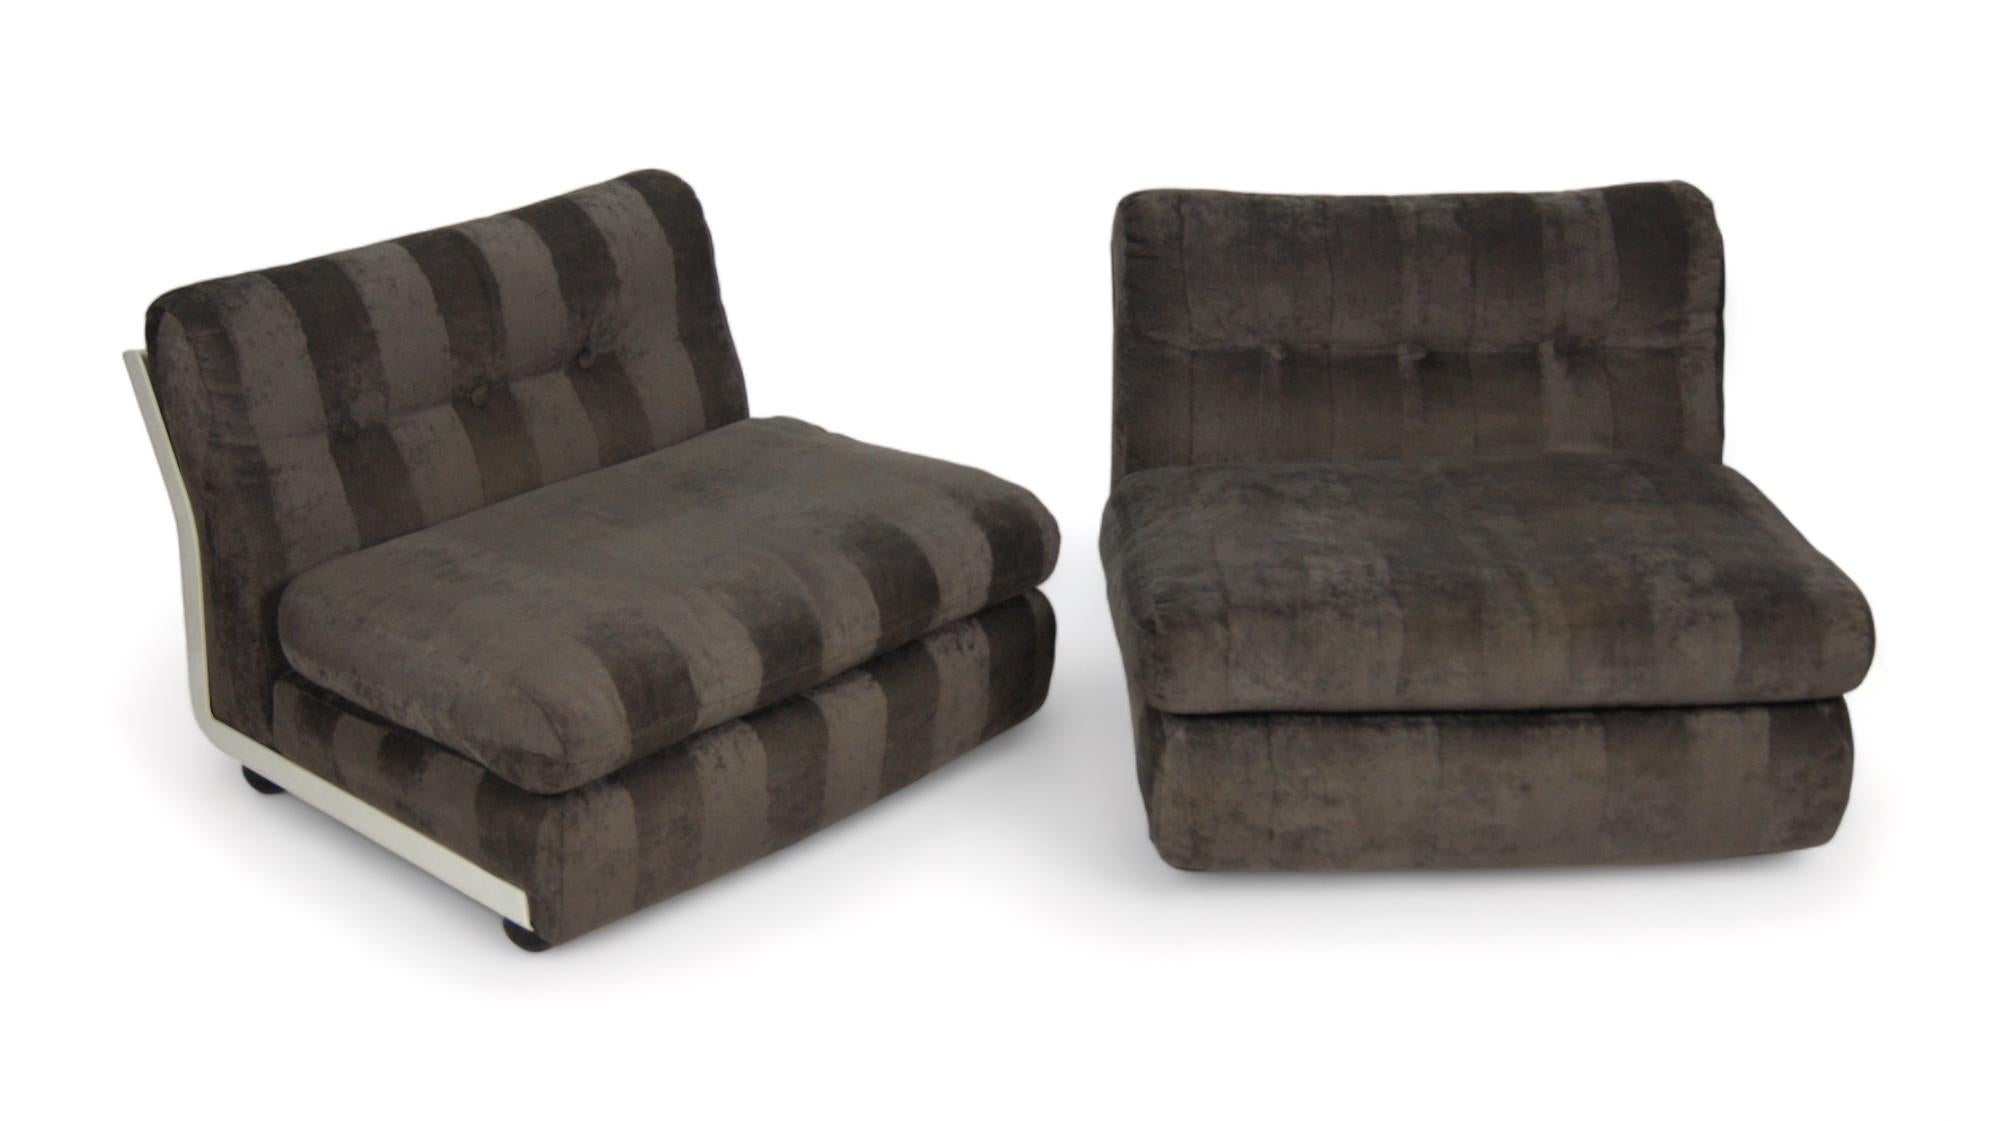 B&B Italia Mario Bellini Amanta Italian design modular sofa in dark fabric In Good Condition For Sale In BARCELONA, ES